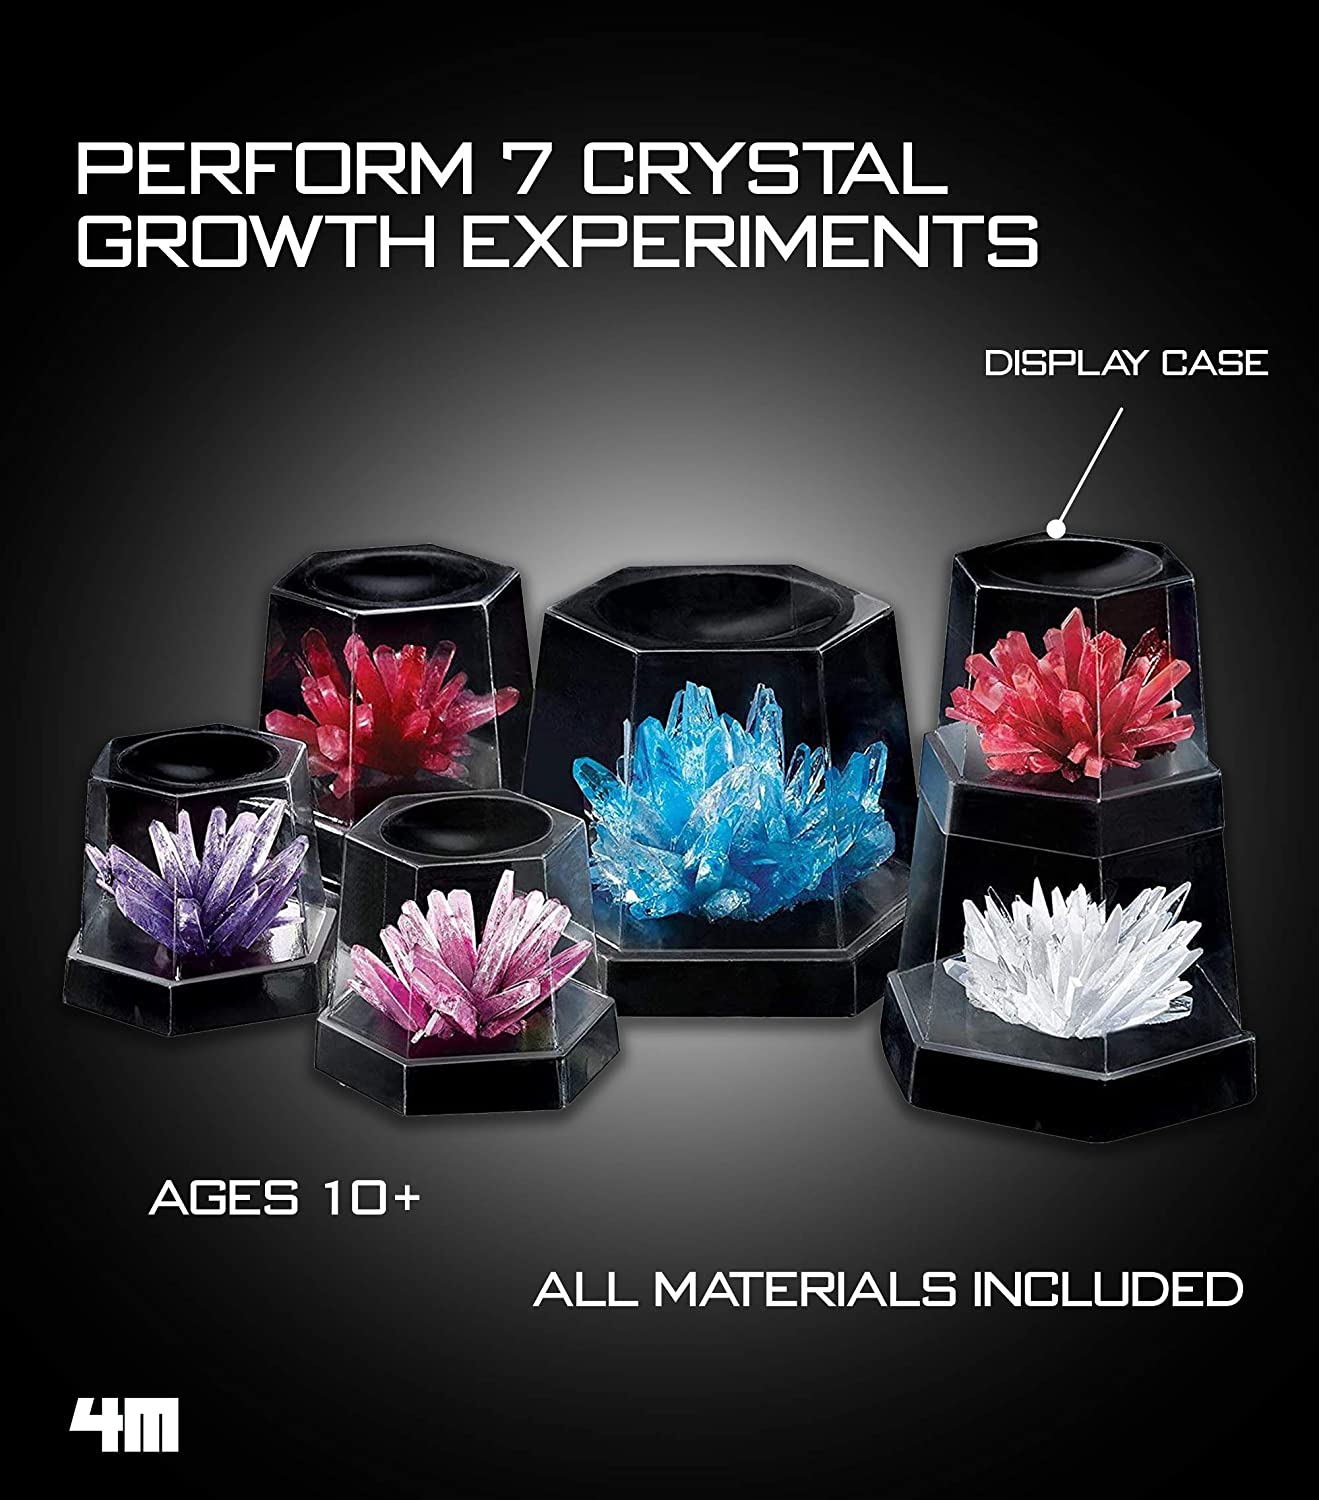 Crystal Growing: Experimental Kit | 4M